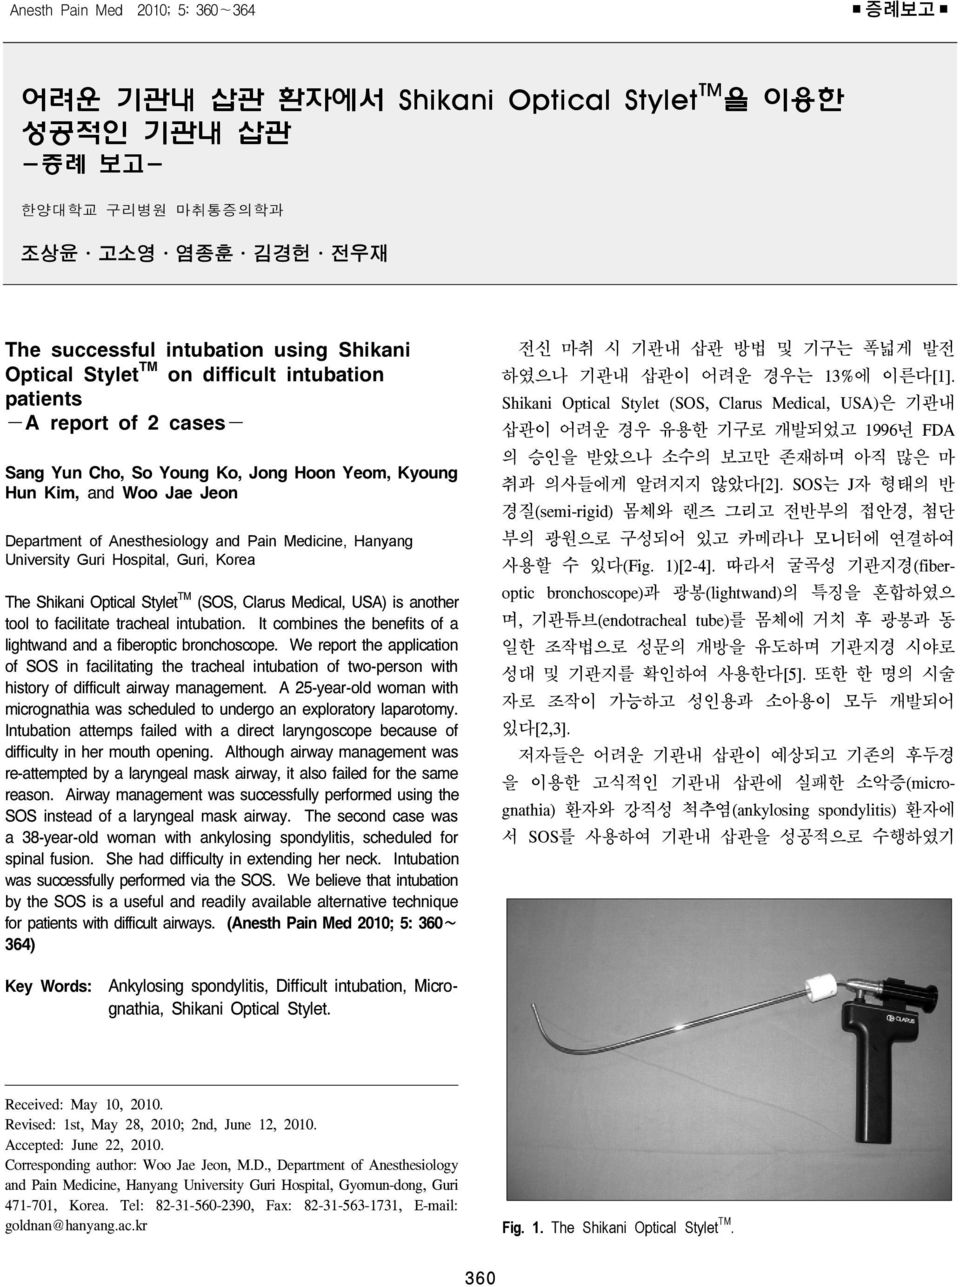 Guri Hospital, Guri, Korea The Shikani Optical Stylet TM (SOS, Clarus Medical, USA) is another tool to facilitate tracheal intubation.